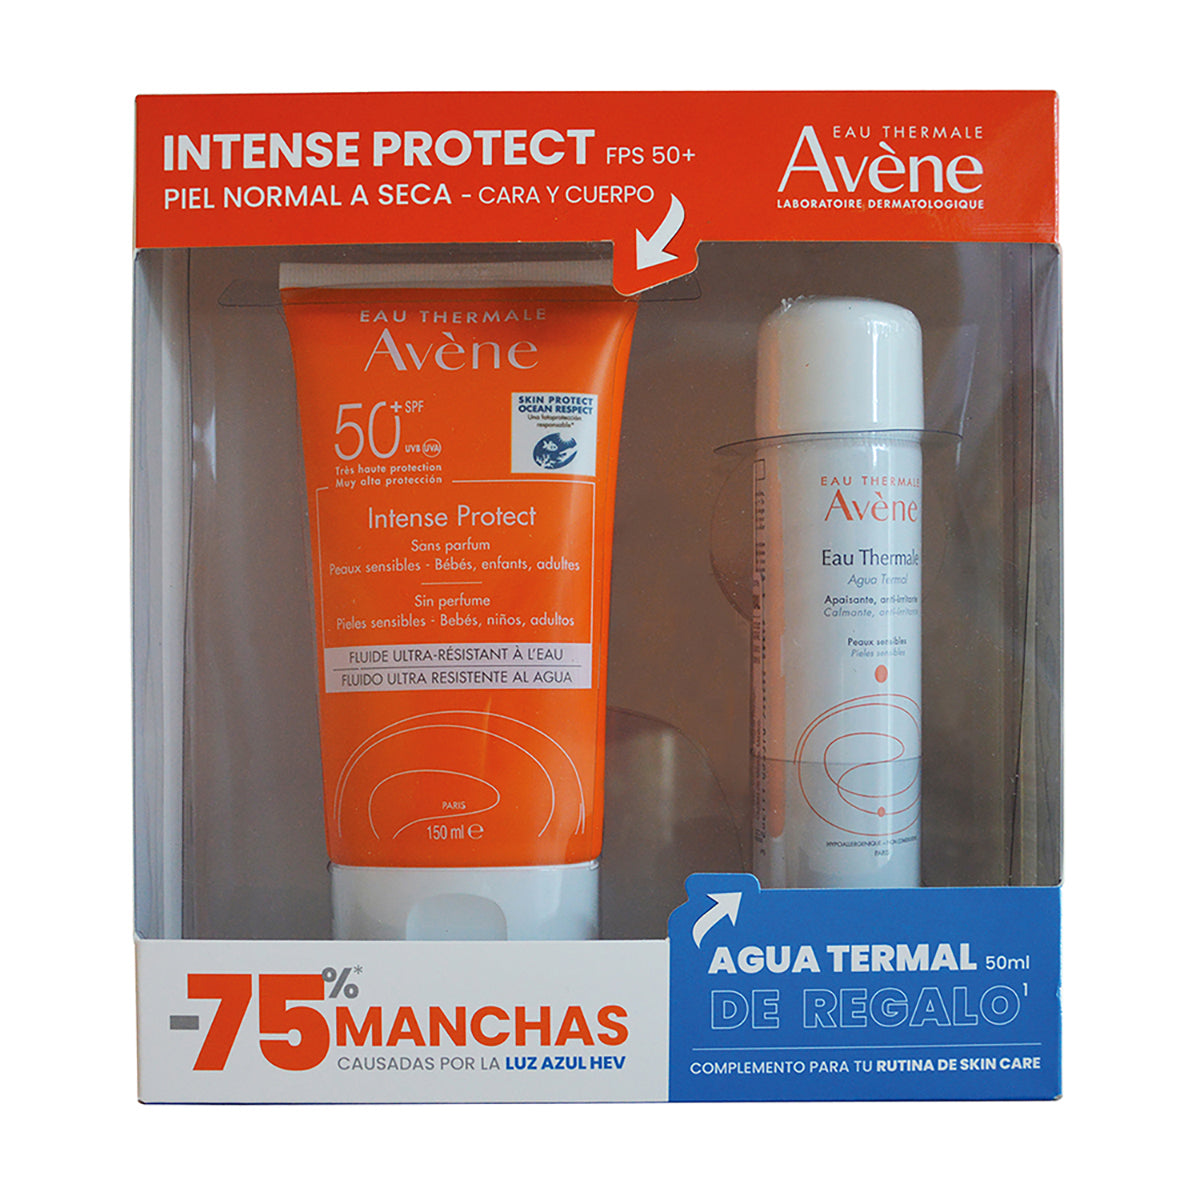 Avene kit protector solar intense protect fps50+ 150ml + Agua termal 50ml.